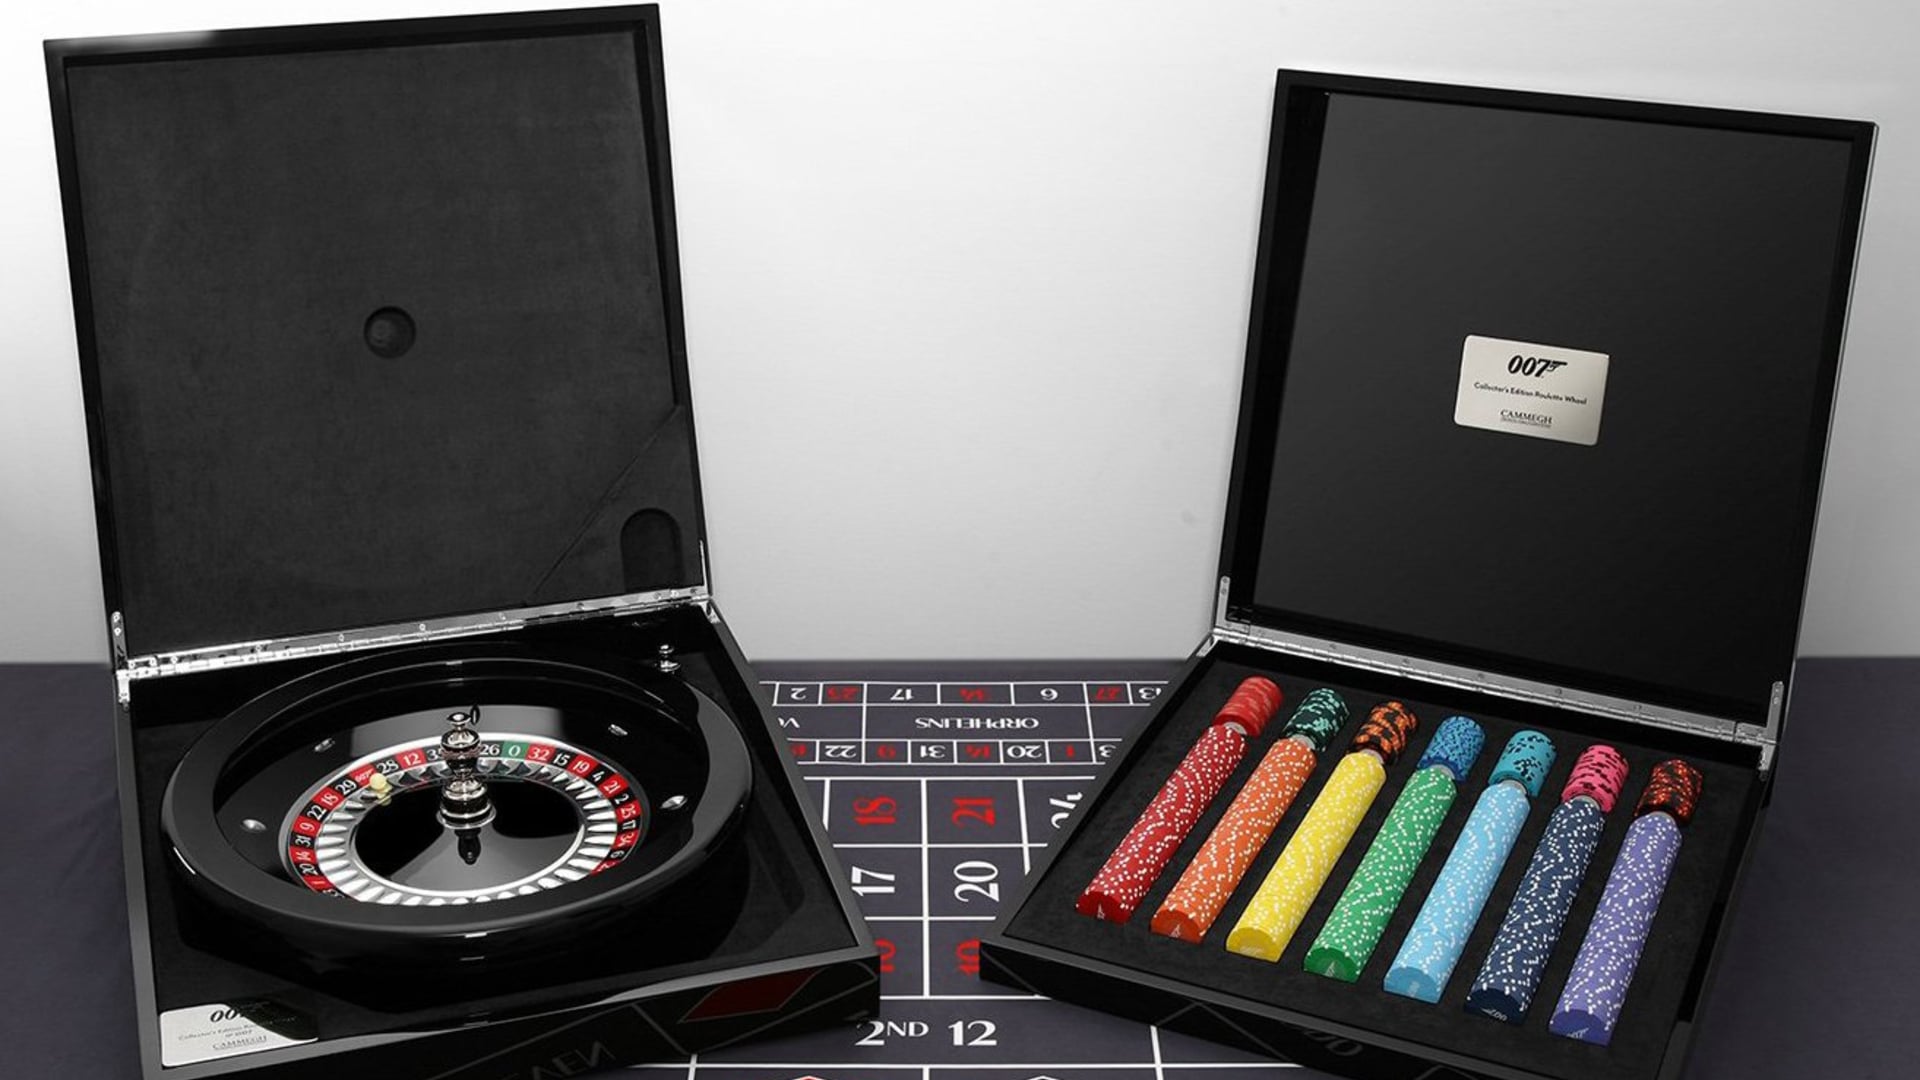 007 Collectors Edition Roulette Wheel